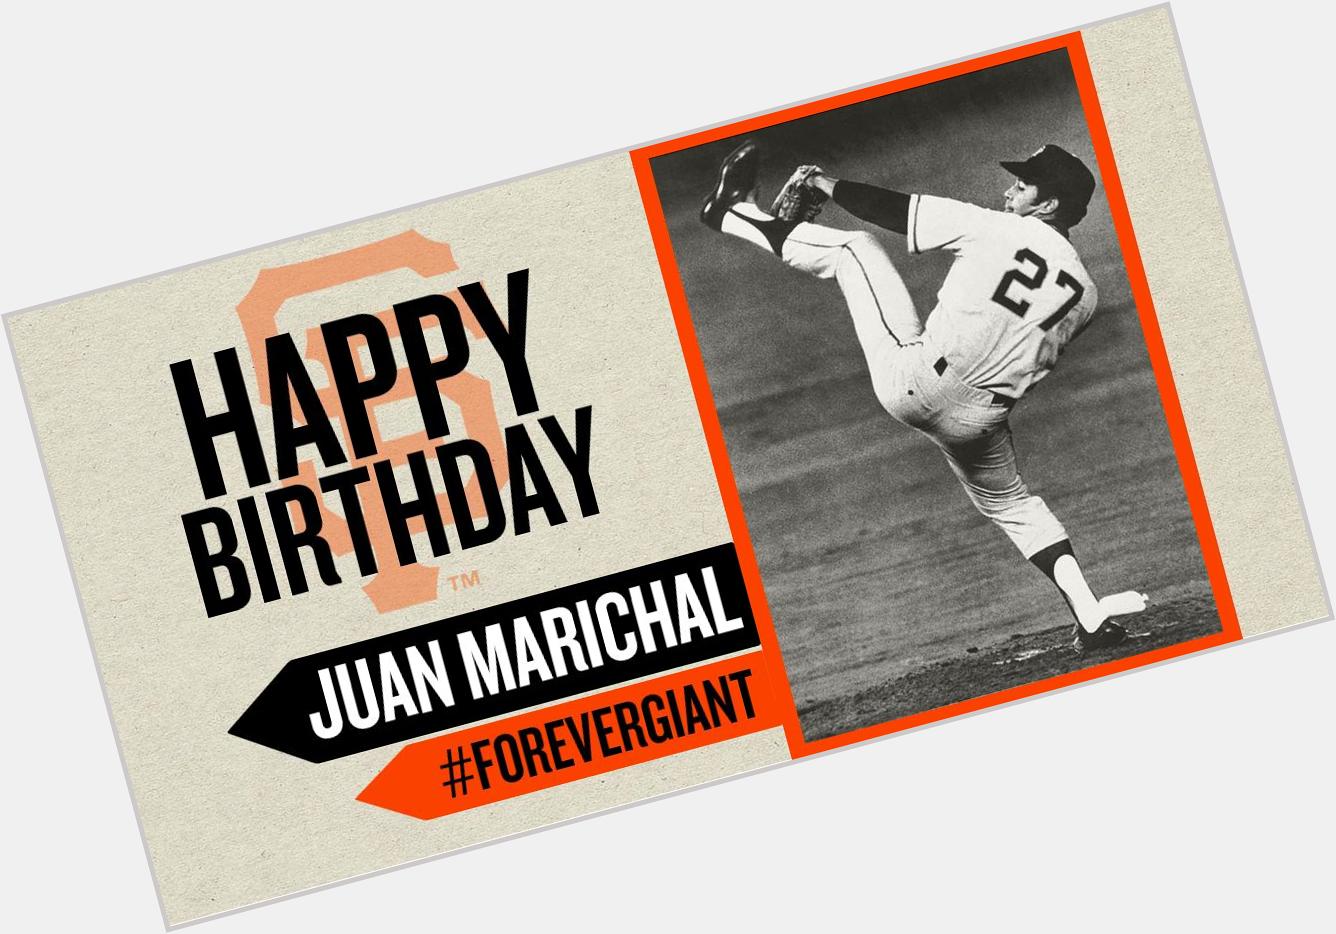 Happy Birthday to Juan Marichal!  